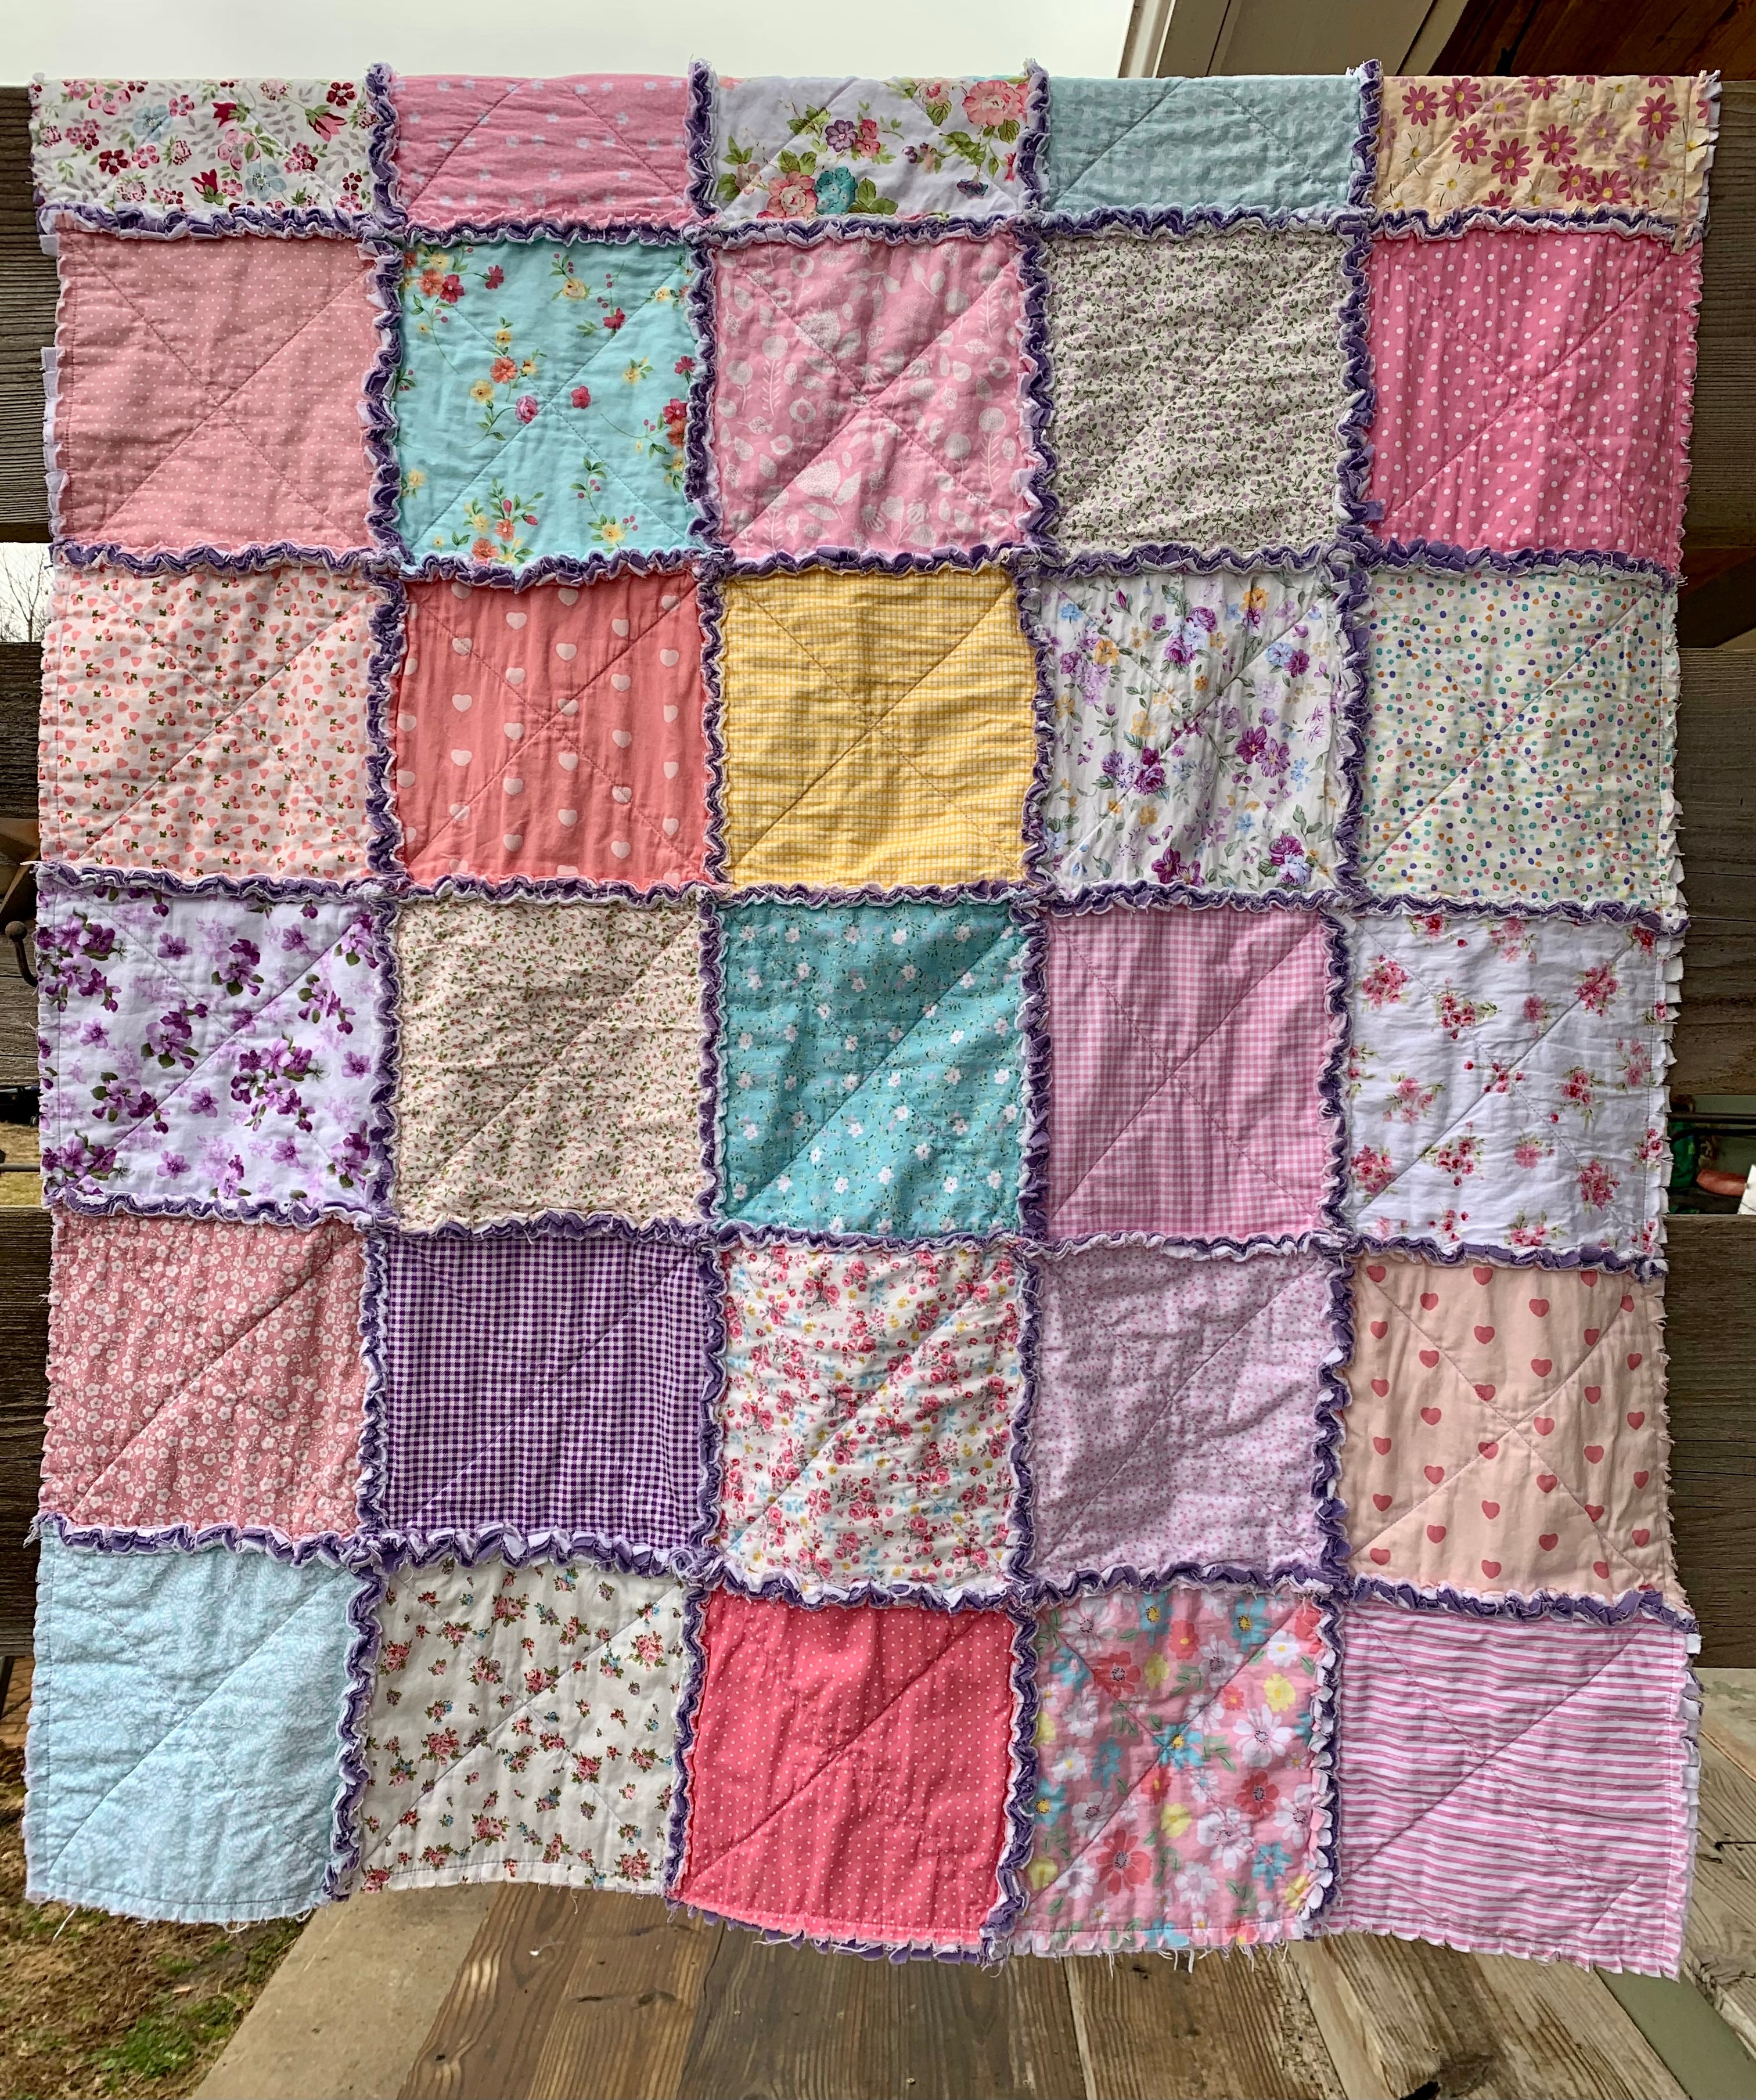 No 2 Squares Alike/Purple Quilt 45"x 55"